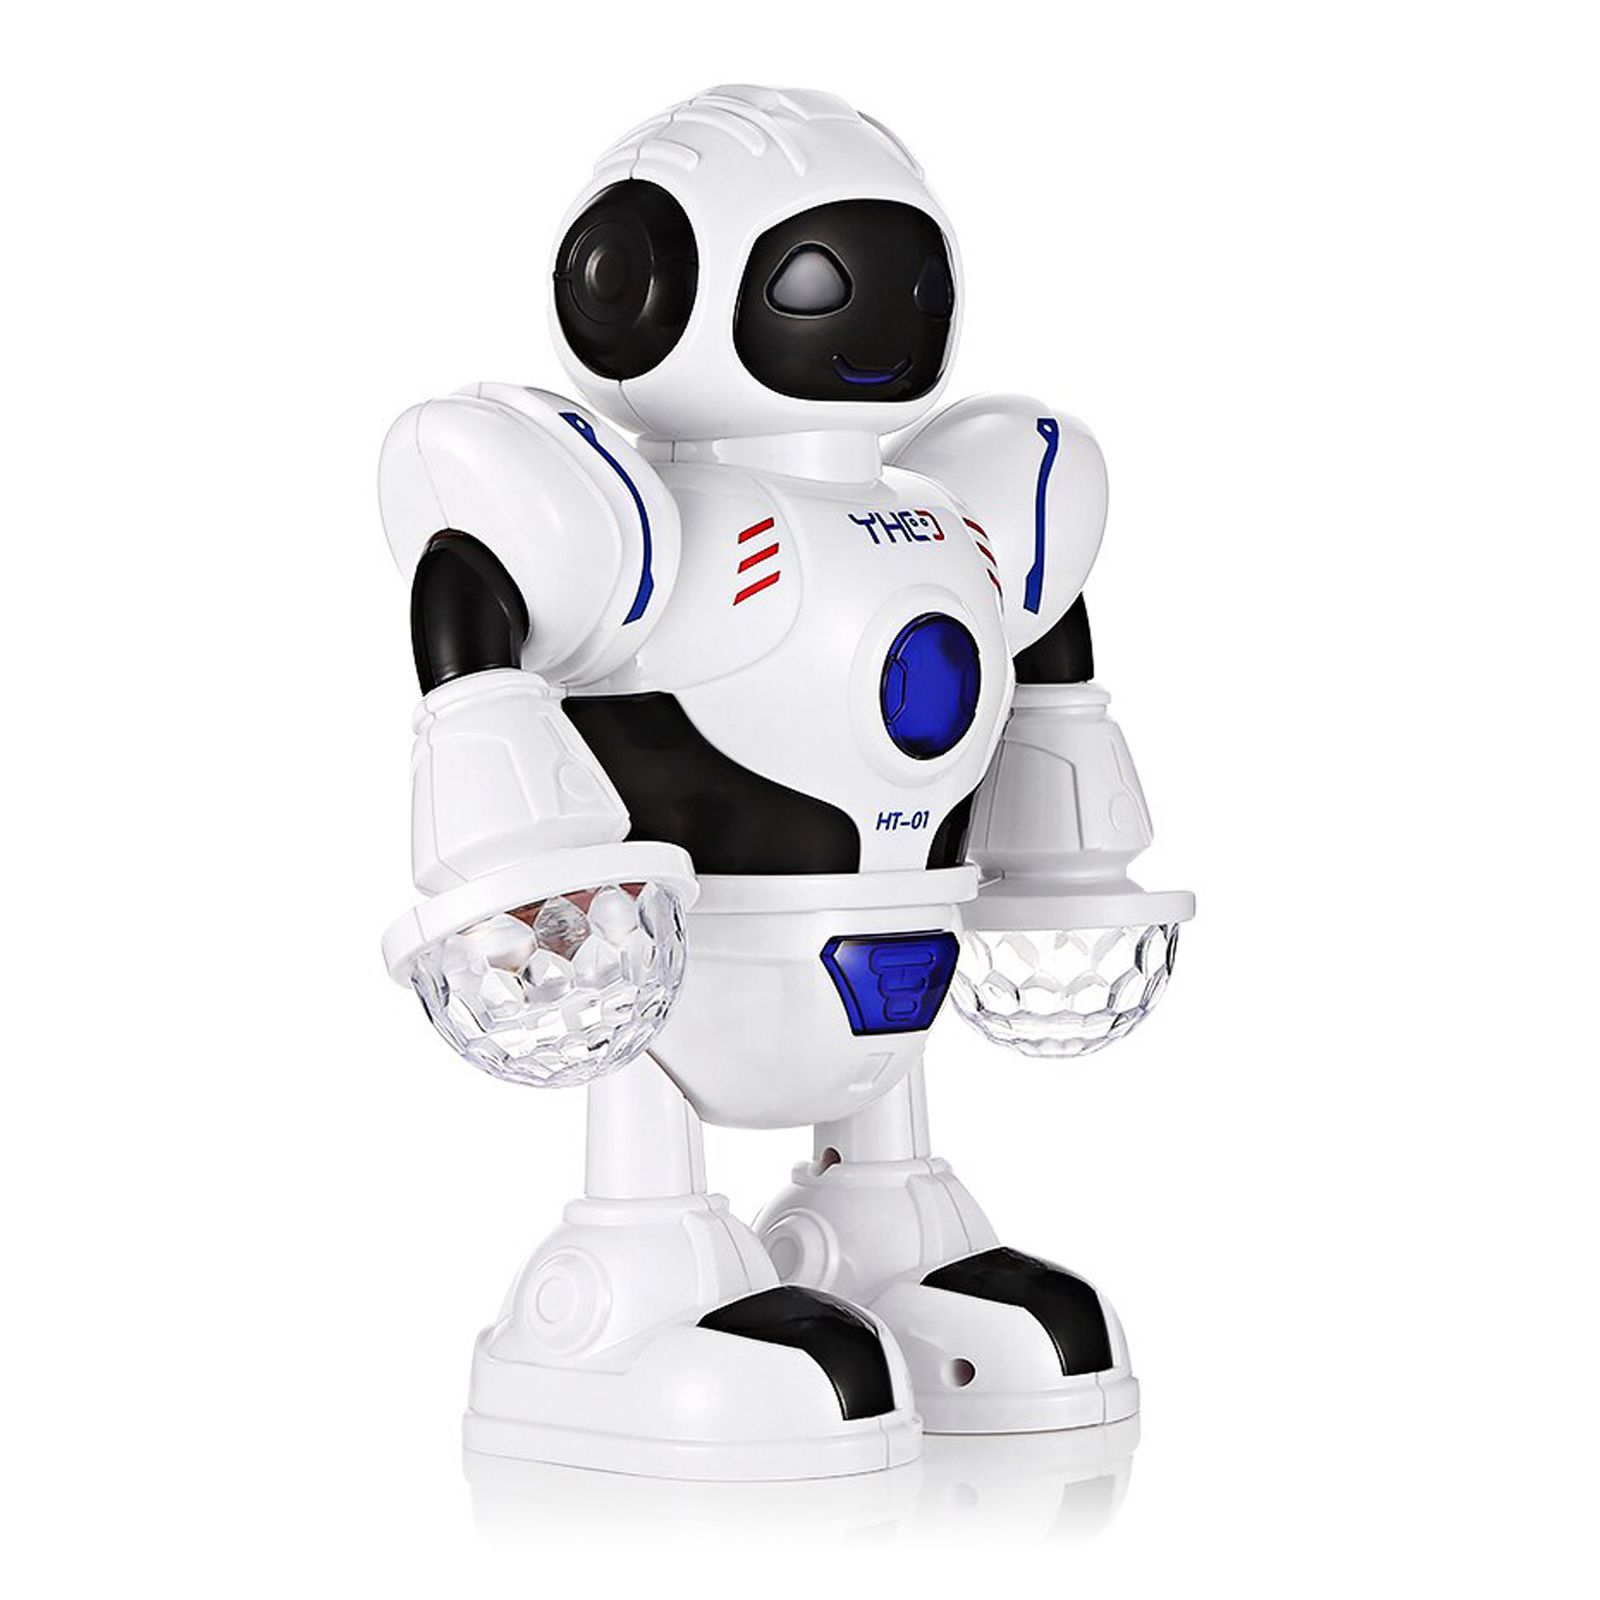 ربات مدل king of robot dance -  - 2